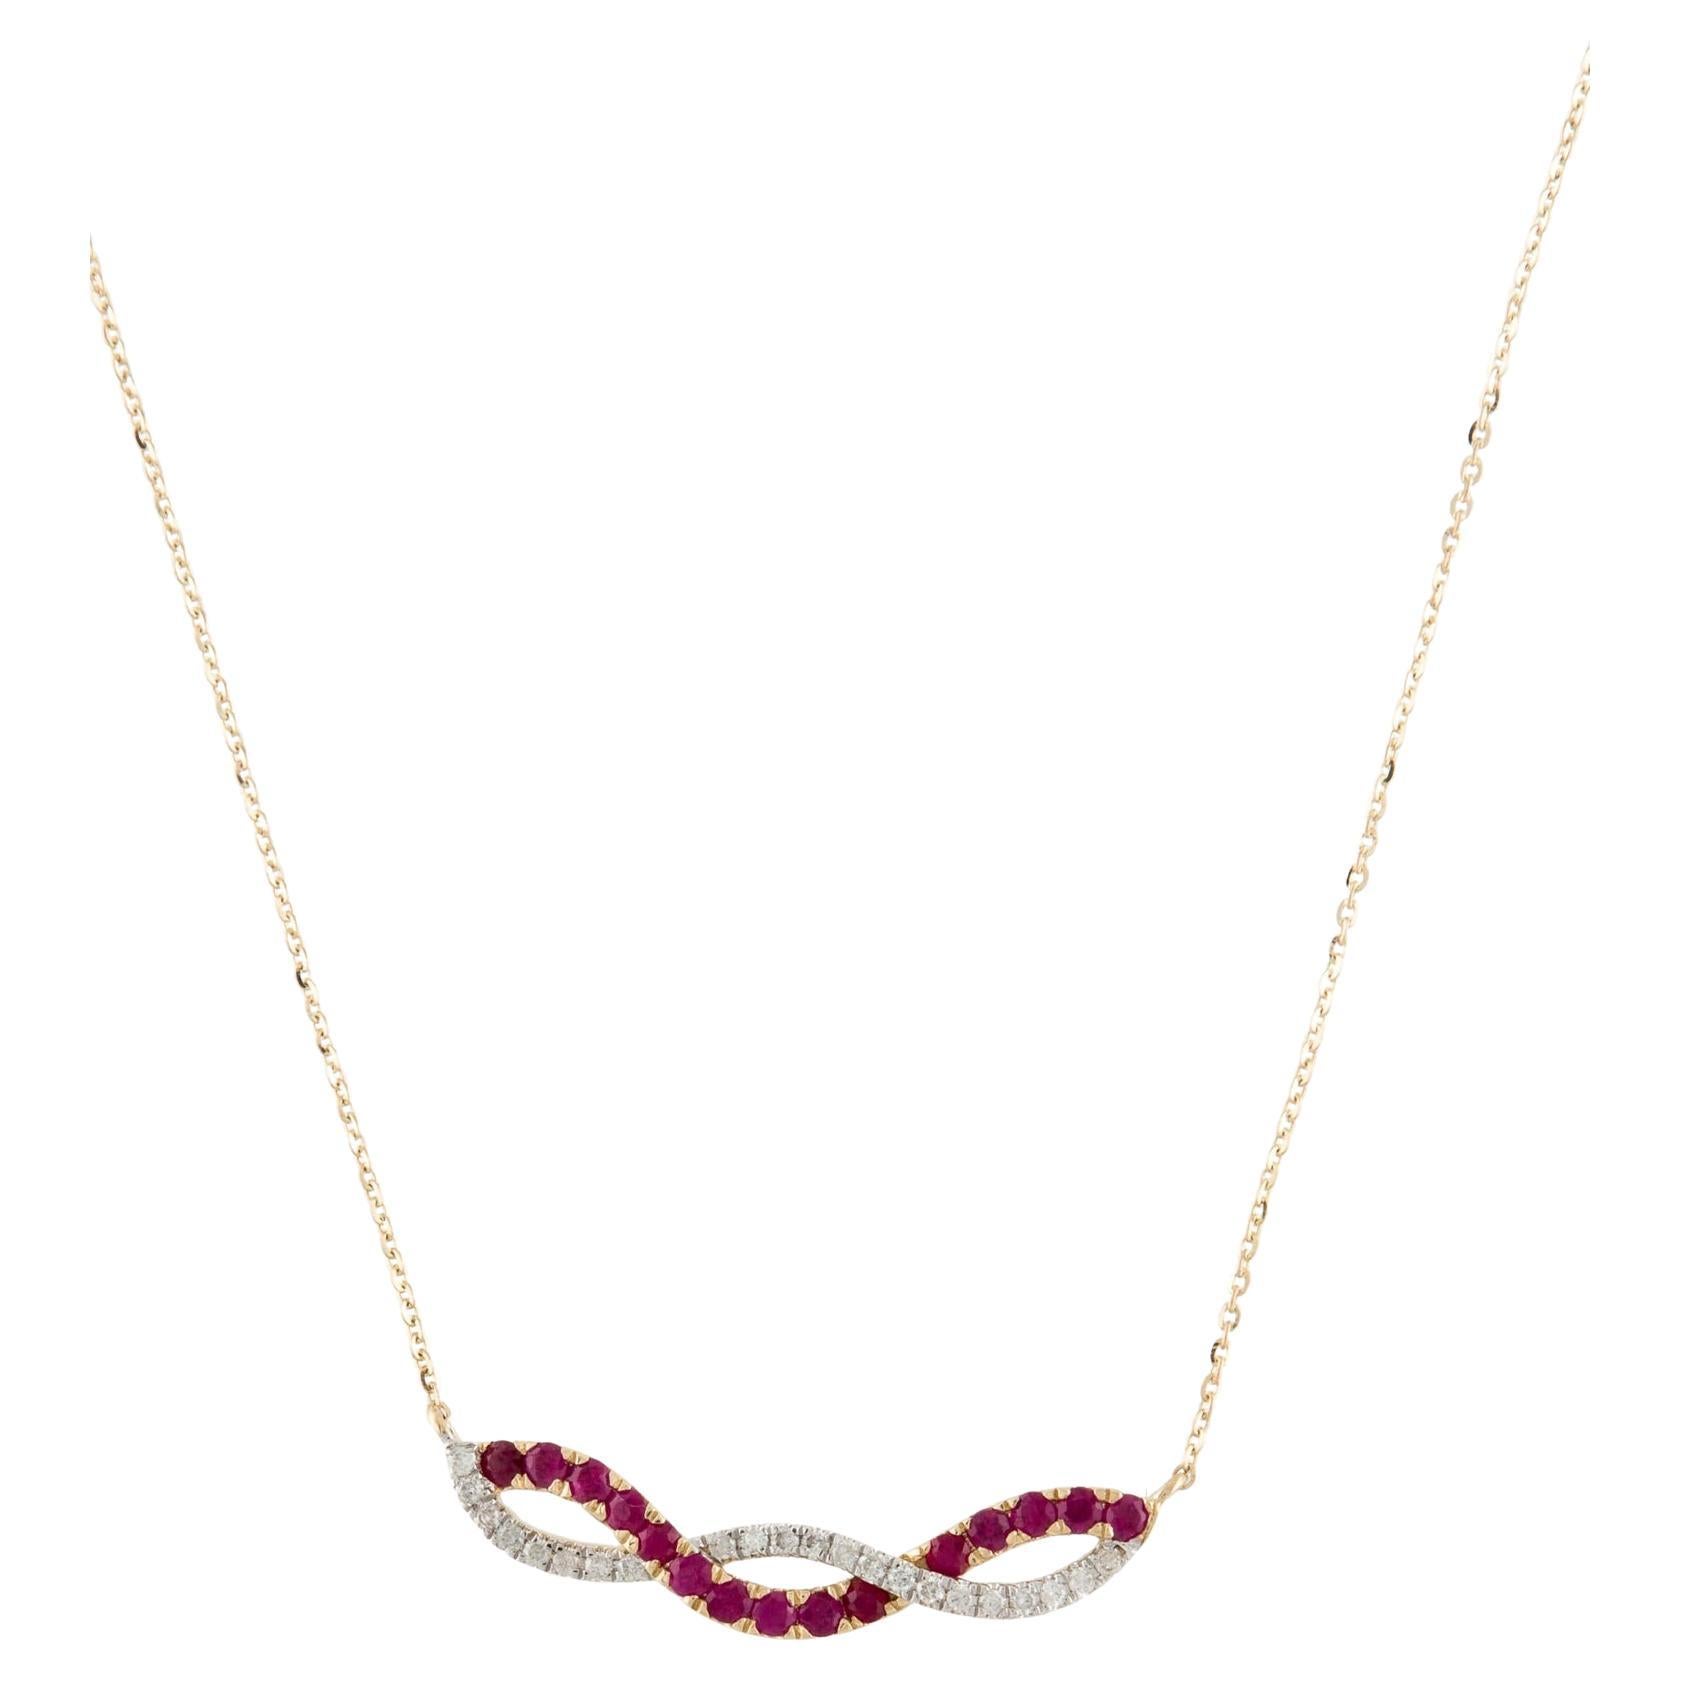 Luxury 14K Ruby & Diamond Pendant Necklace - Elegant Gemstone, Statement Jewelry For Sale